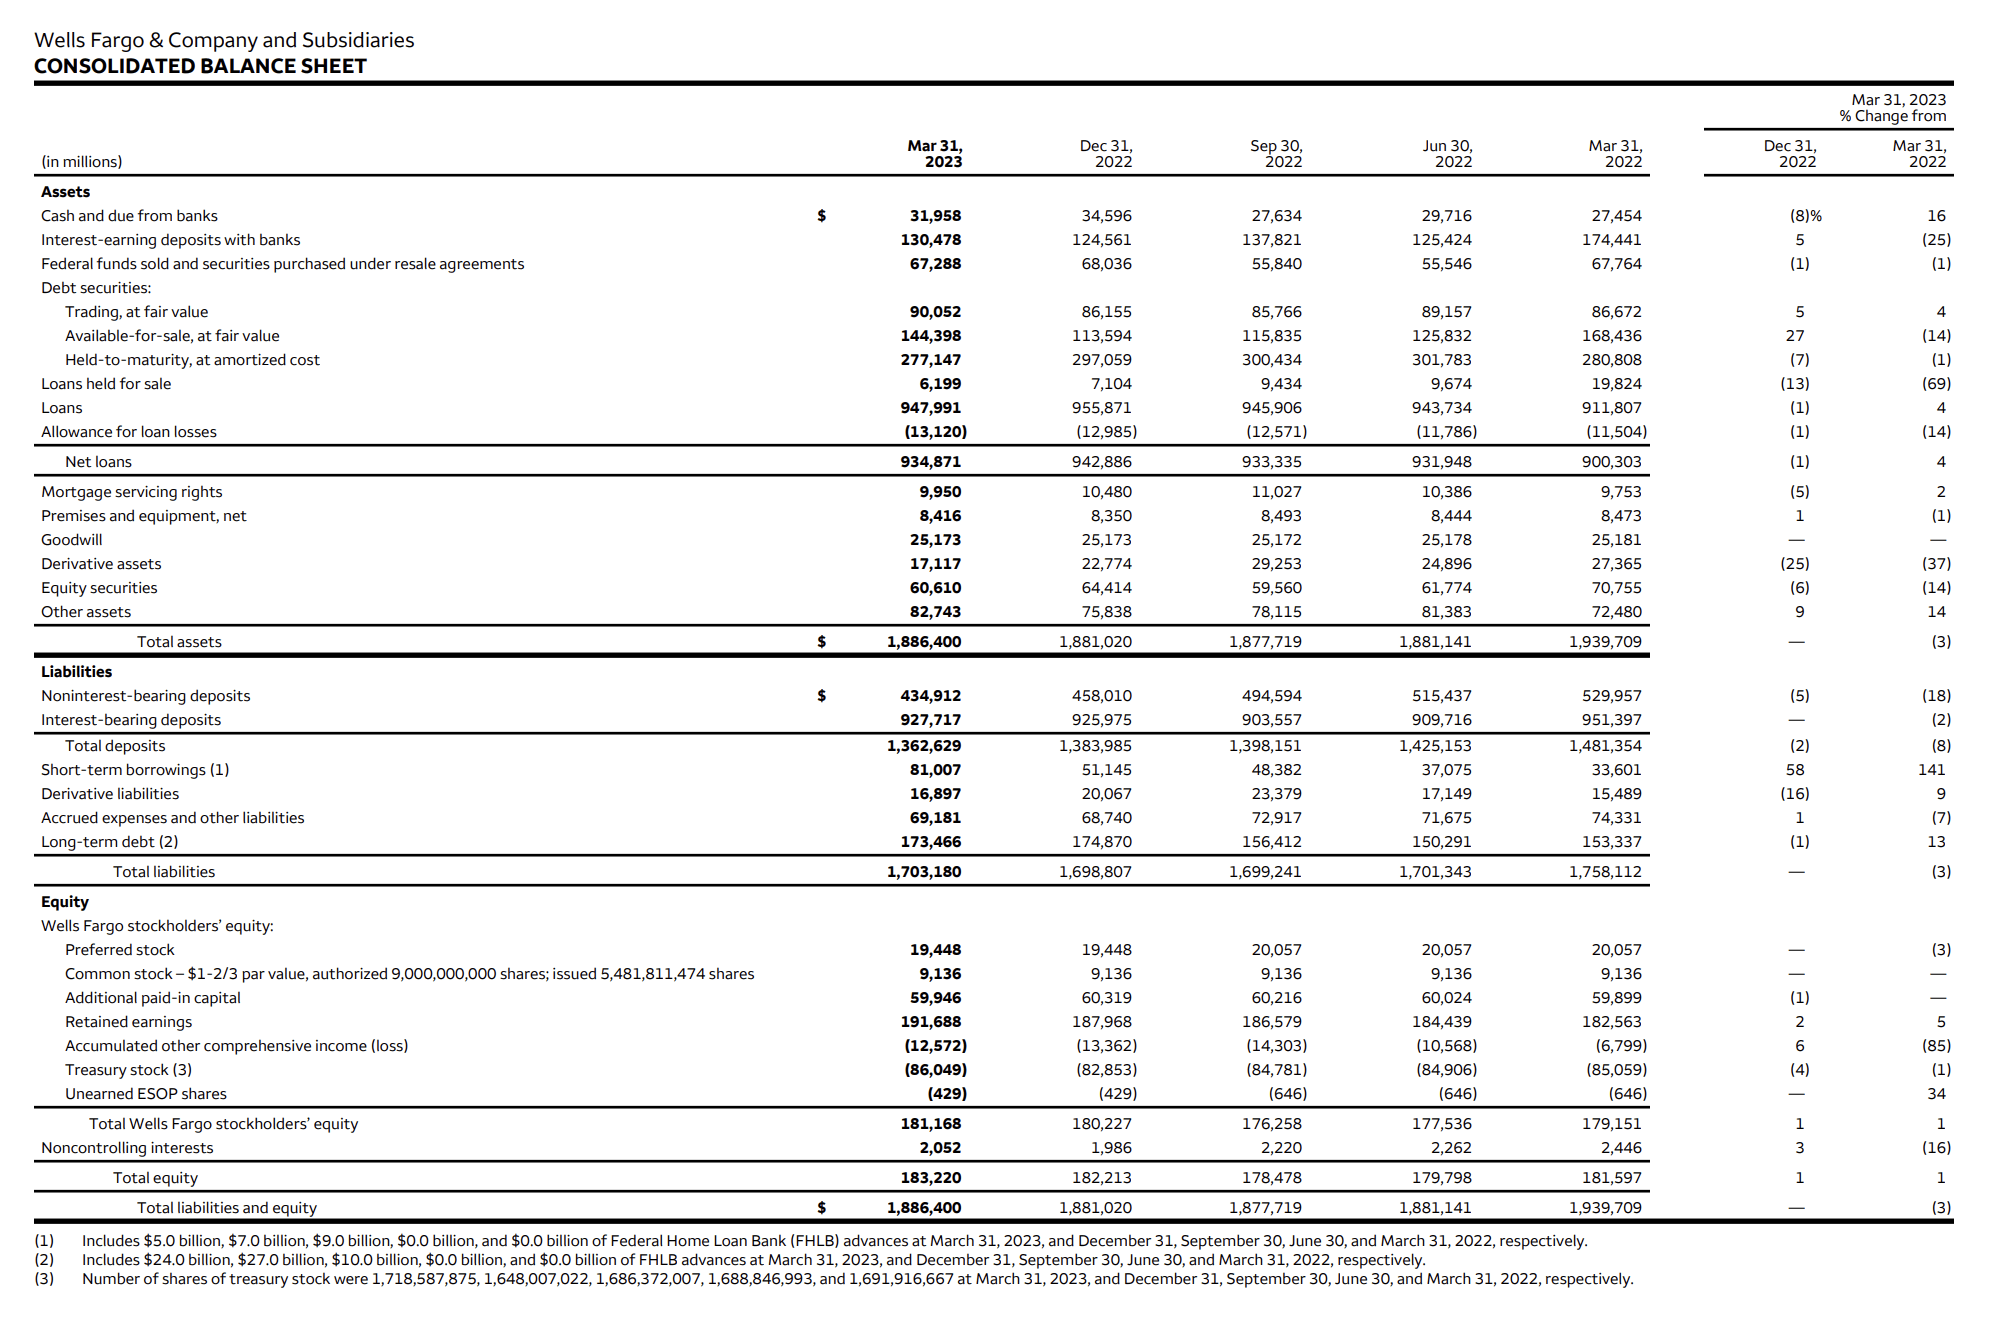 Wells Fargo 1Q23 bank earnings - balance sheet - The Basis Point